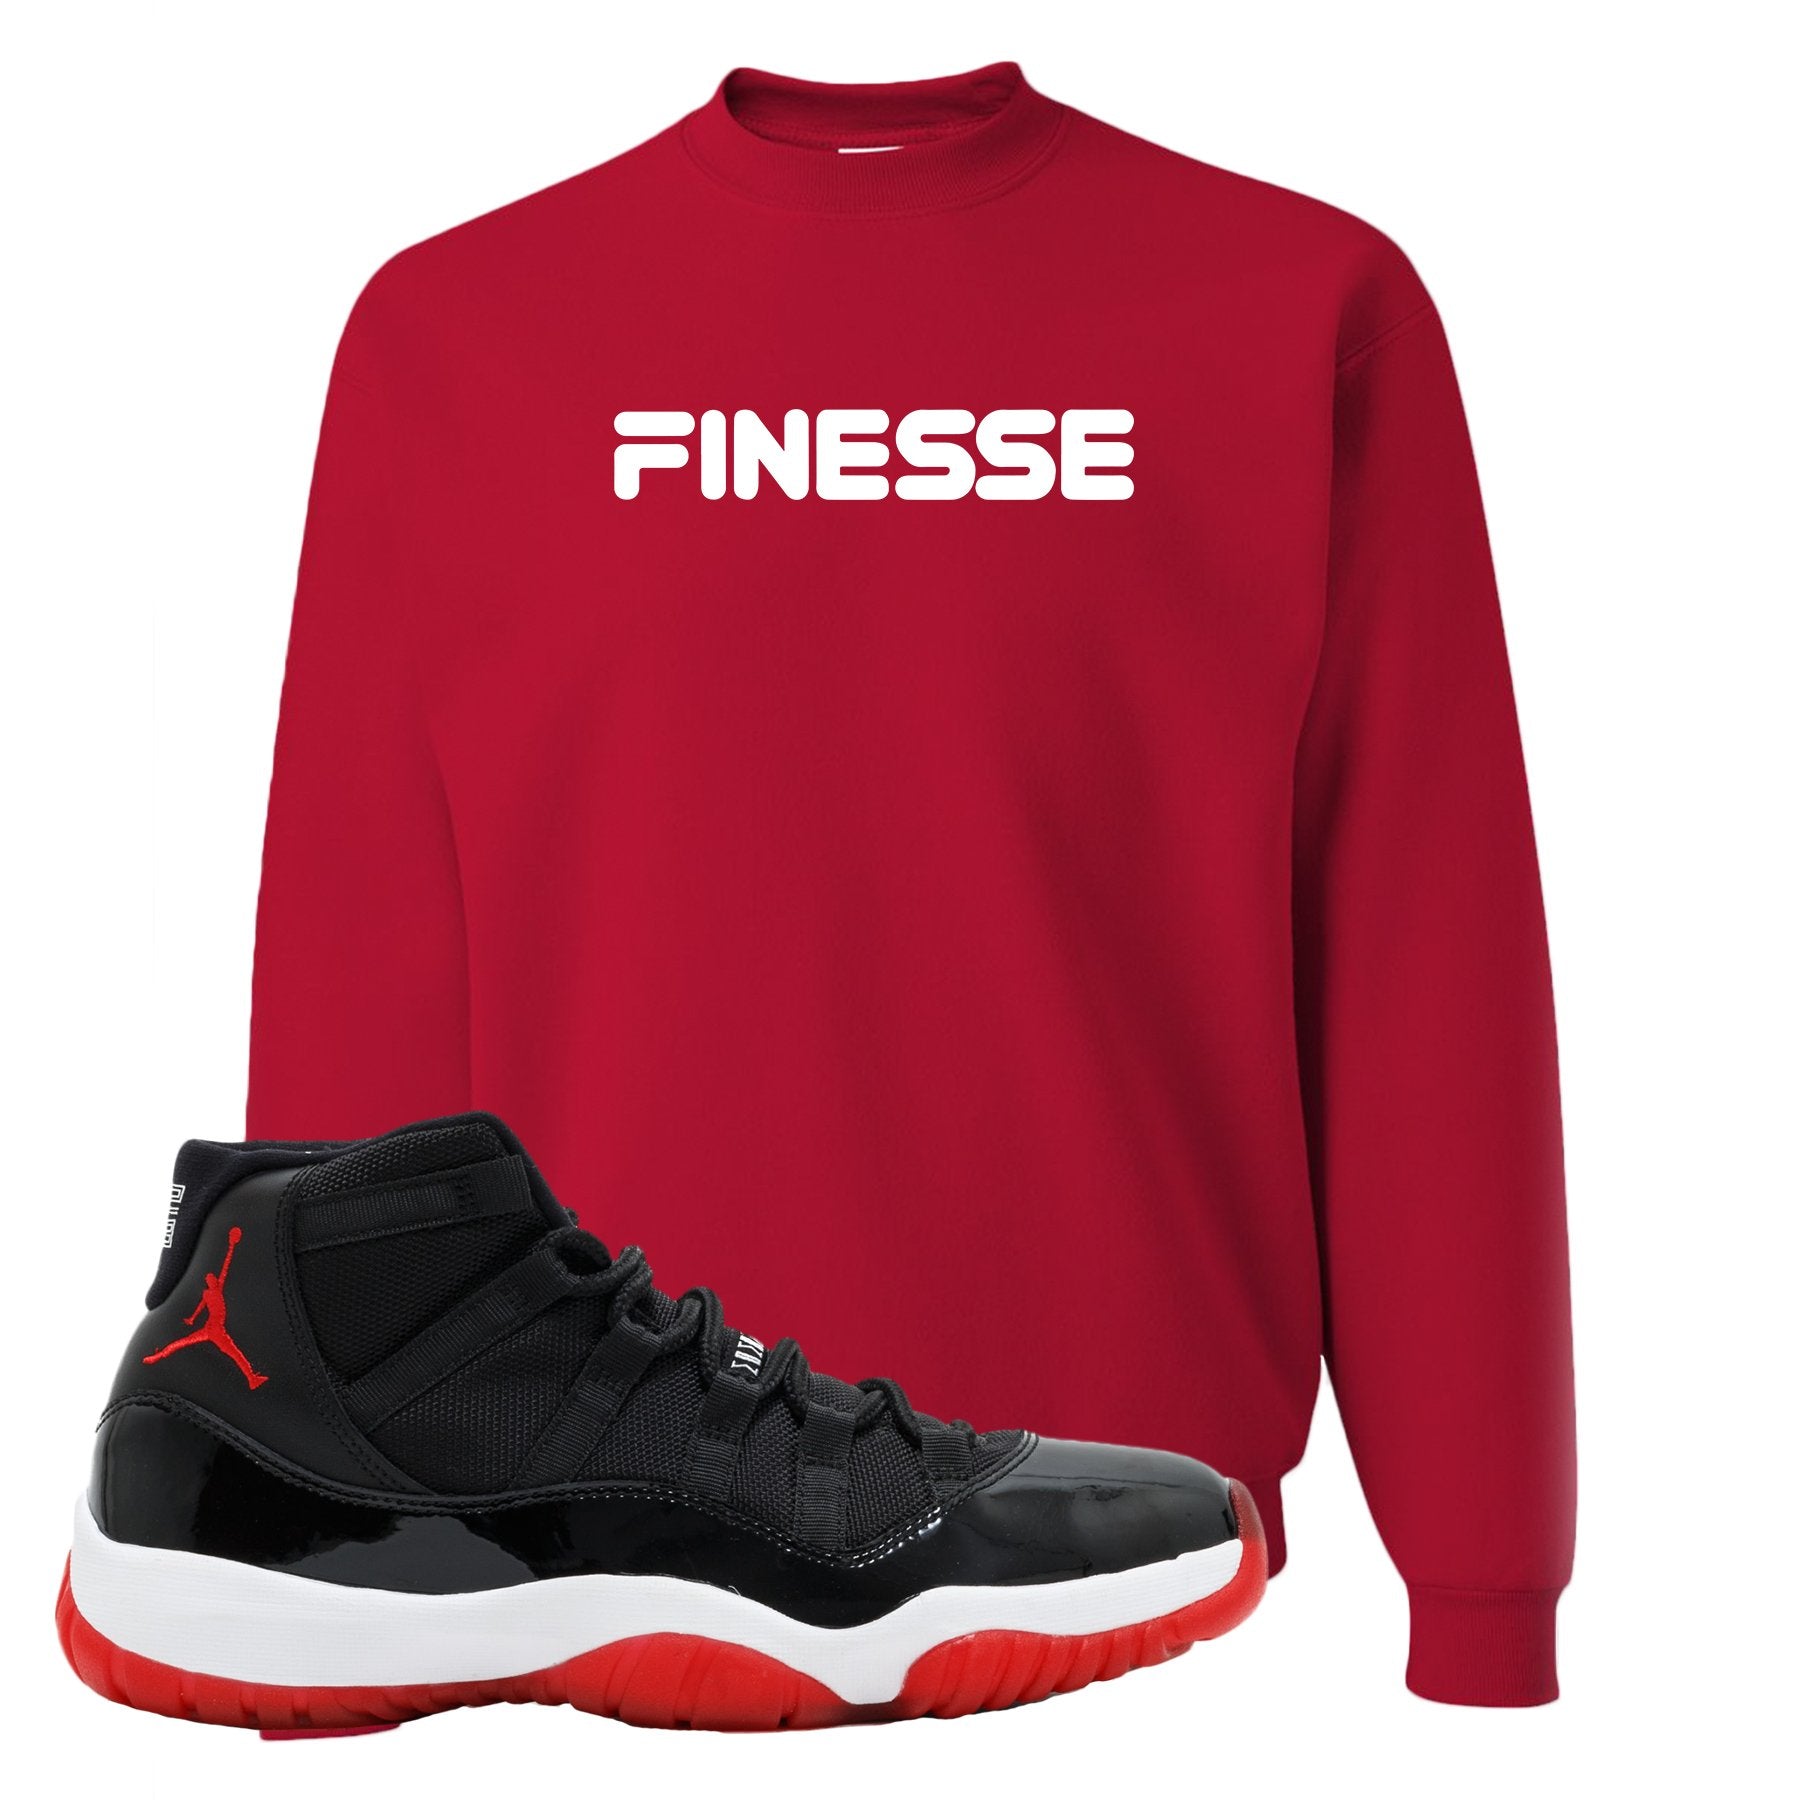 Jordan 11 Bred Finesse Red Sneaker Hook Up Crewneck Sweatshirt